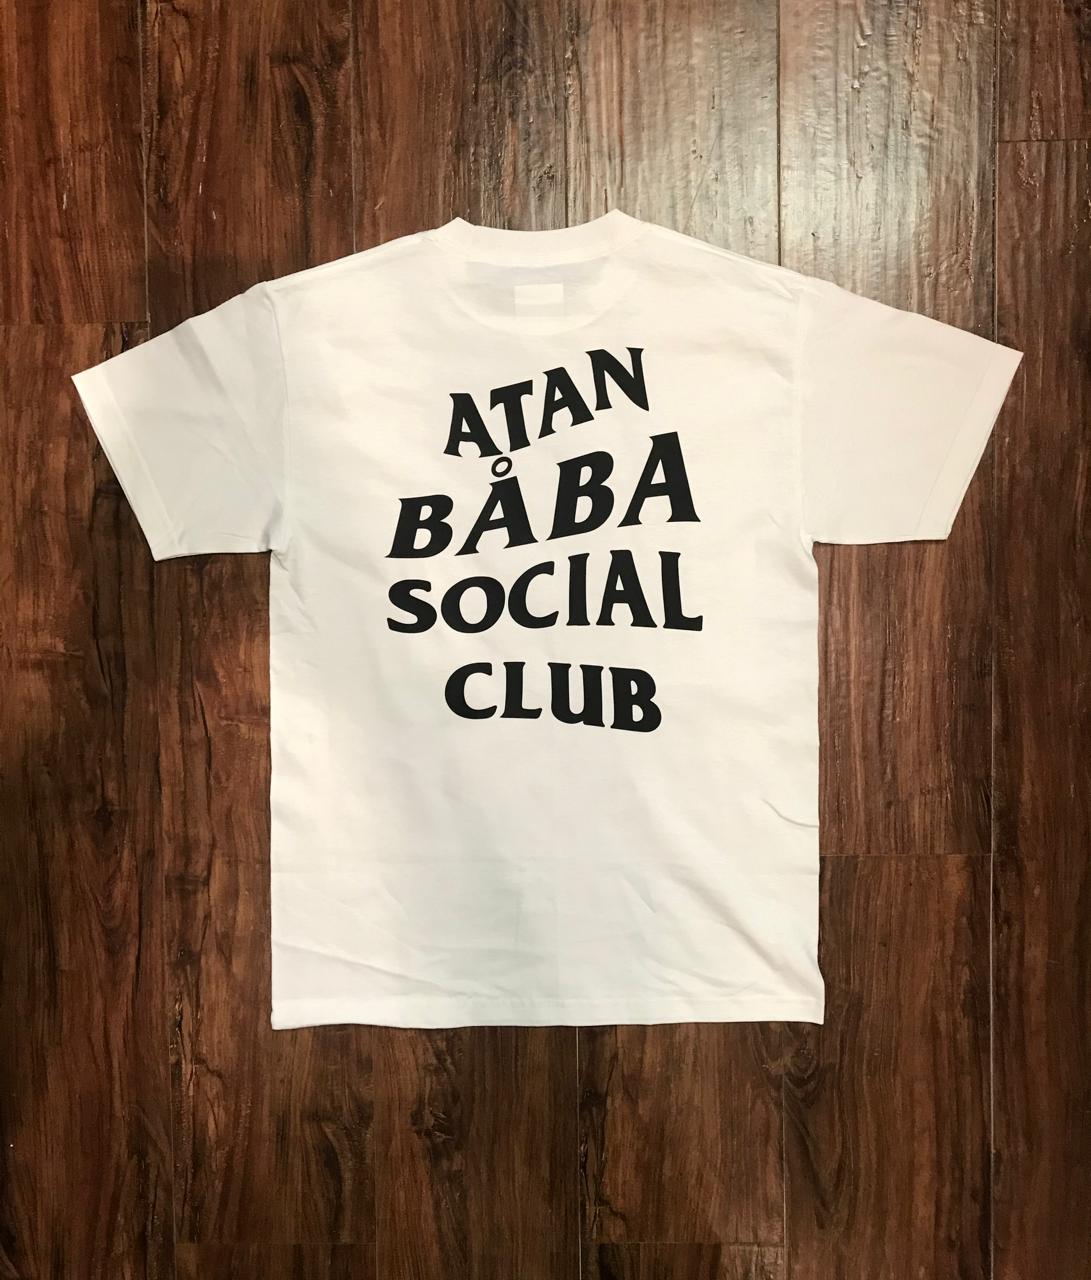 ATAN BABA SOCIAL CLUB II | Buenas & Hafa Adai Inc.